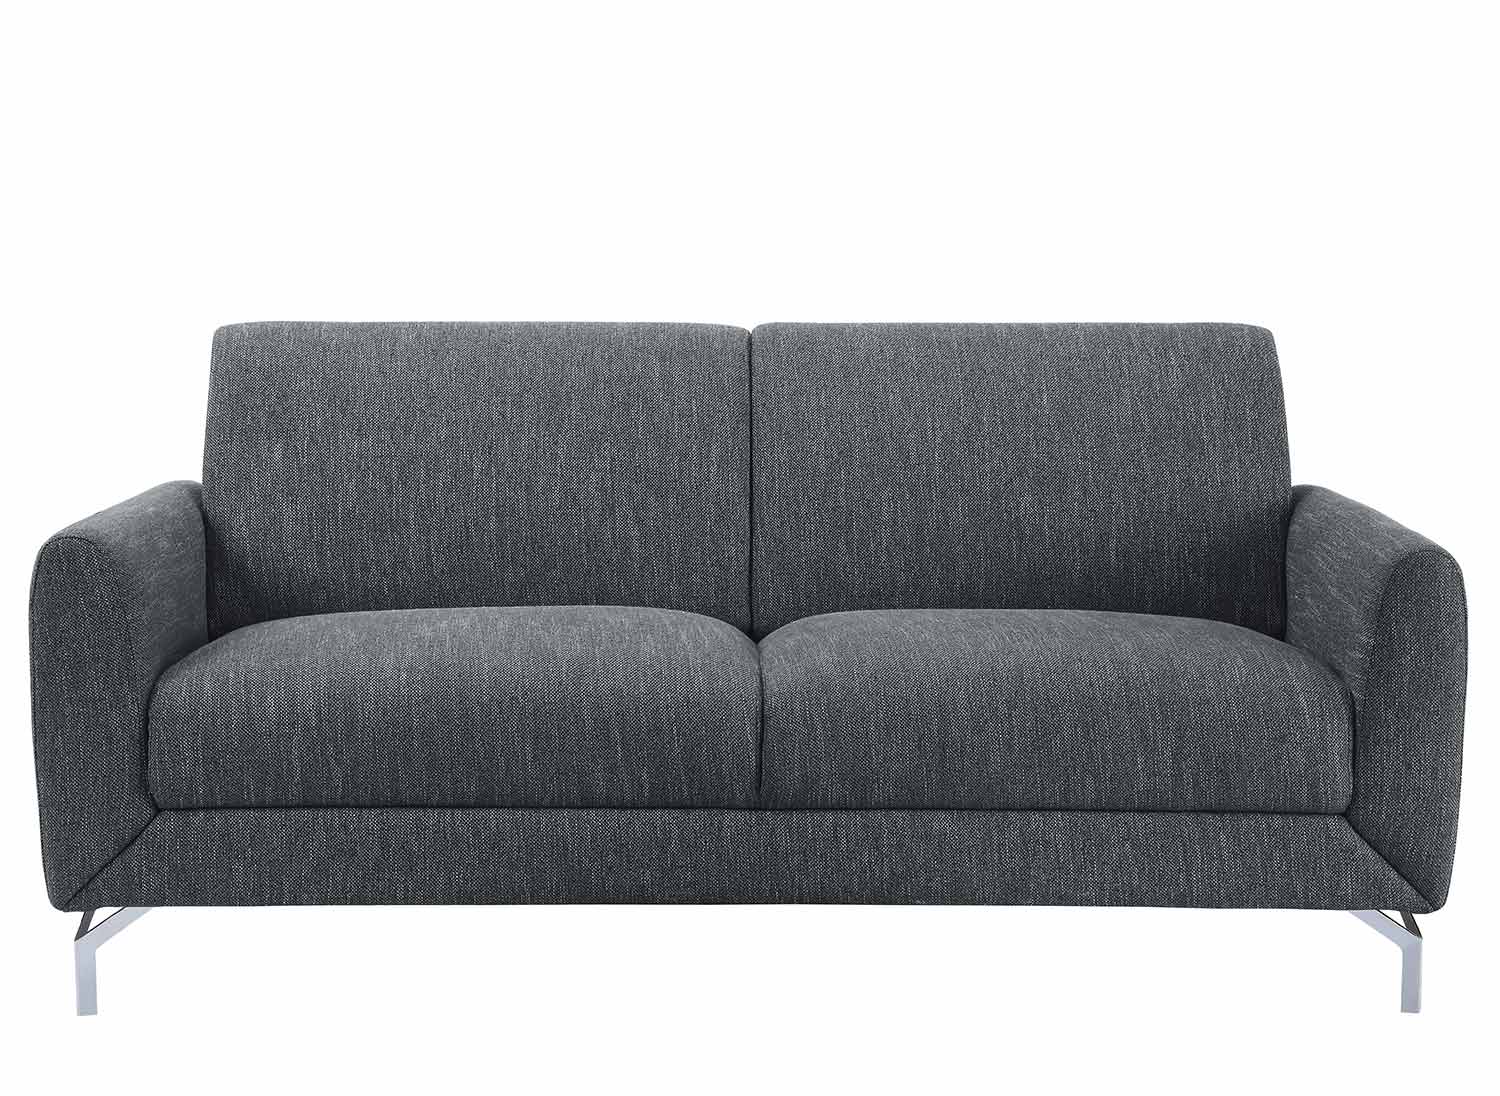 Homelegance Venture Sofa - Dark gray